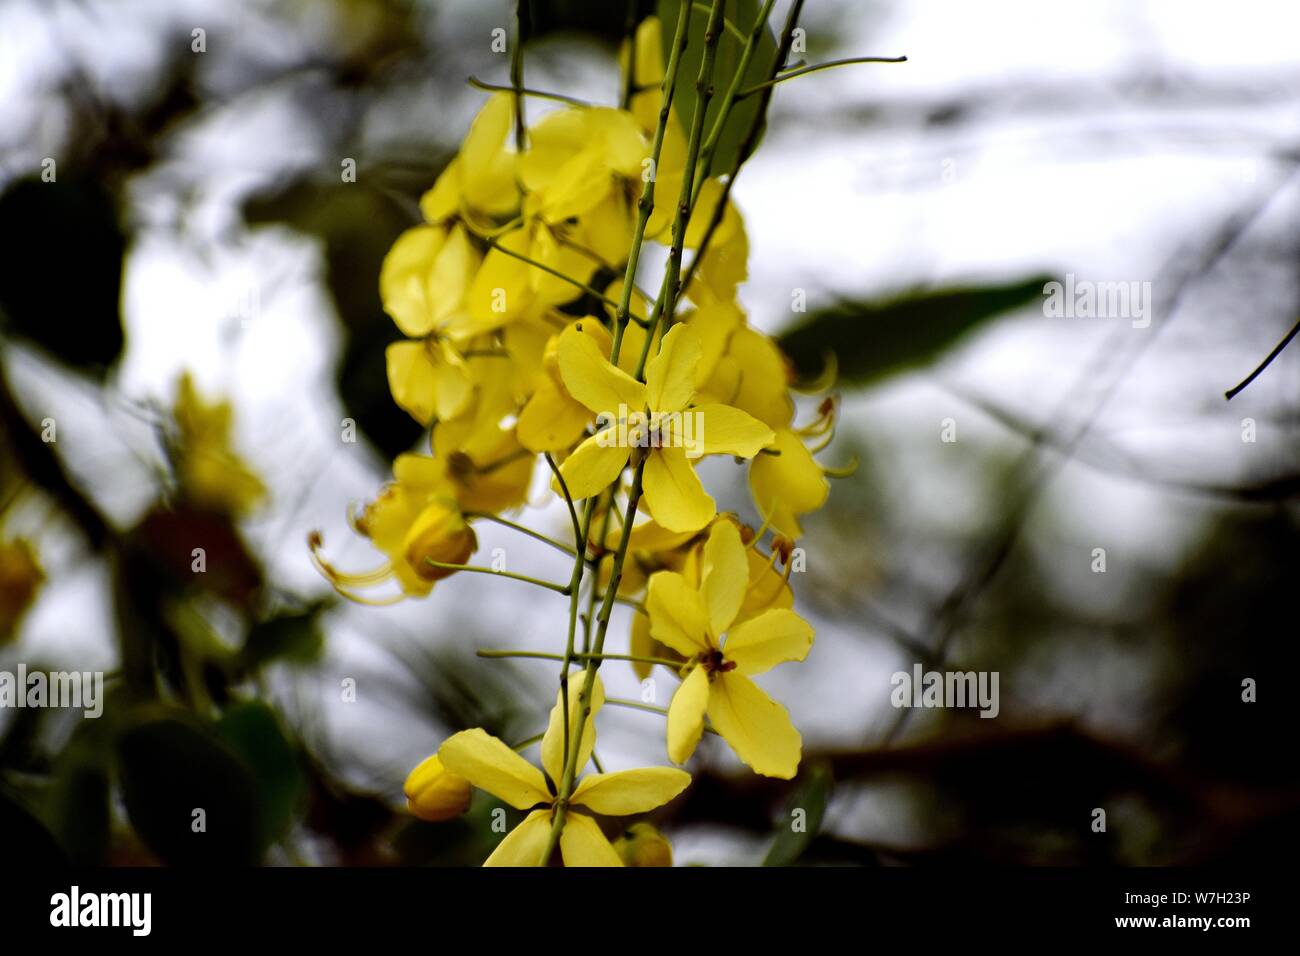 Bunch of Yellow Flowers Stock Photo